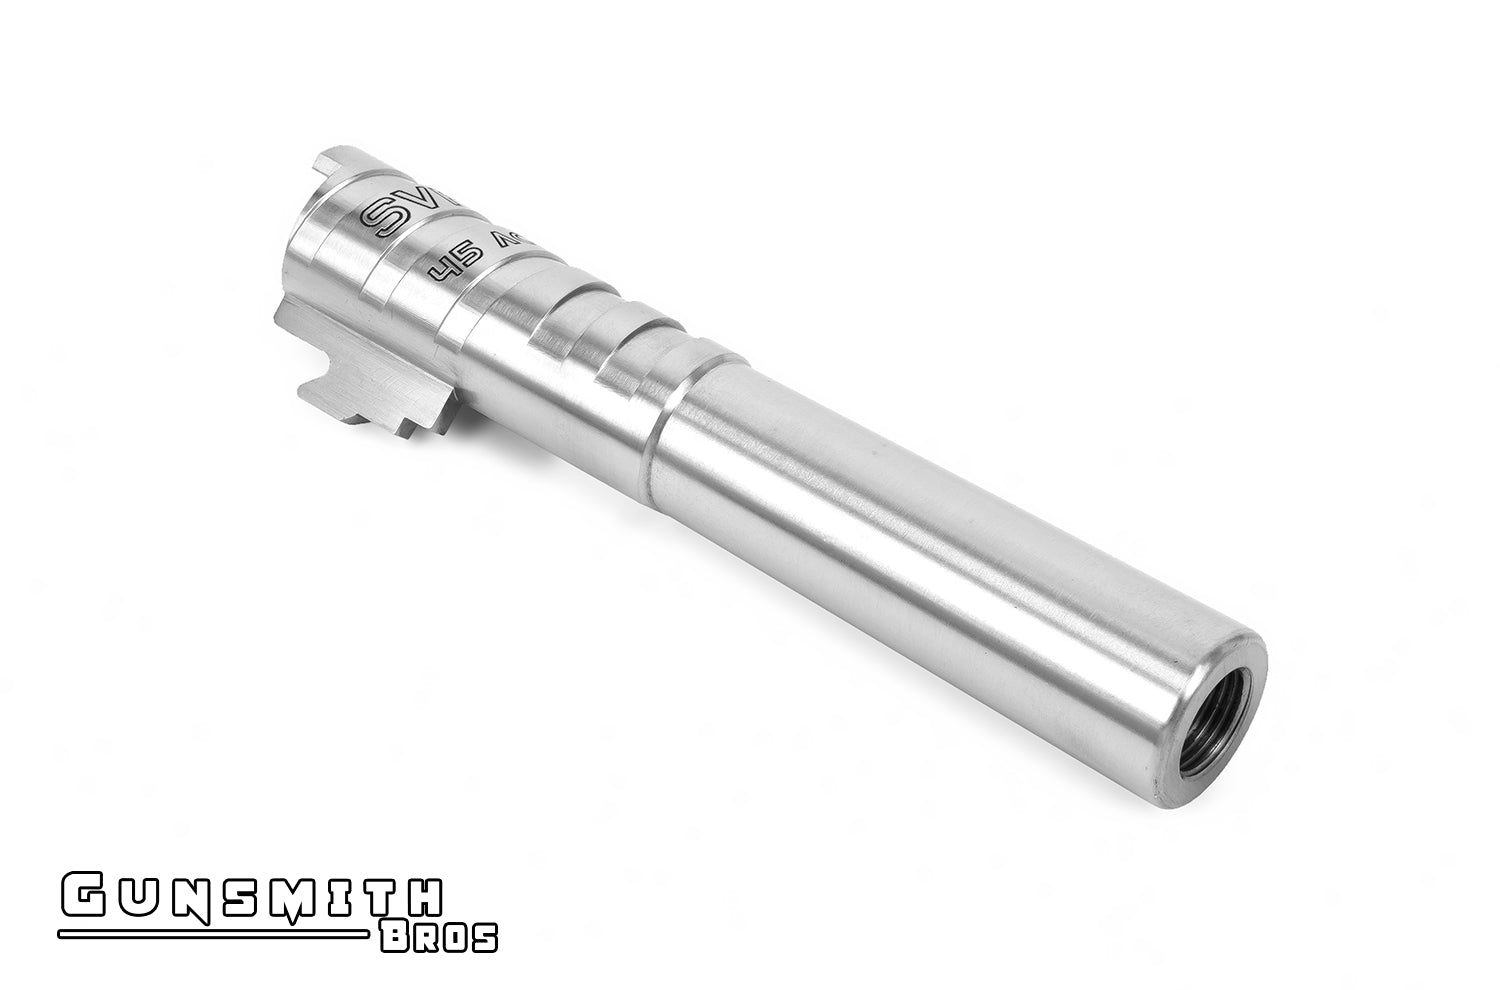 Gunsmith Bros Infinity SVP Steel 4.3 Outer Barrel for HI-CAPA 4.3 - Silver #GB-OBSVP43-SL